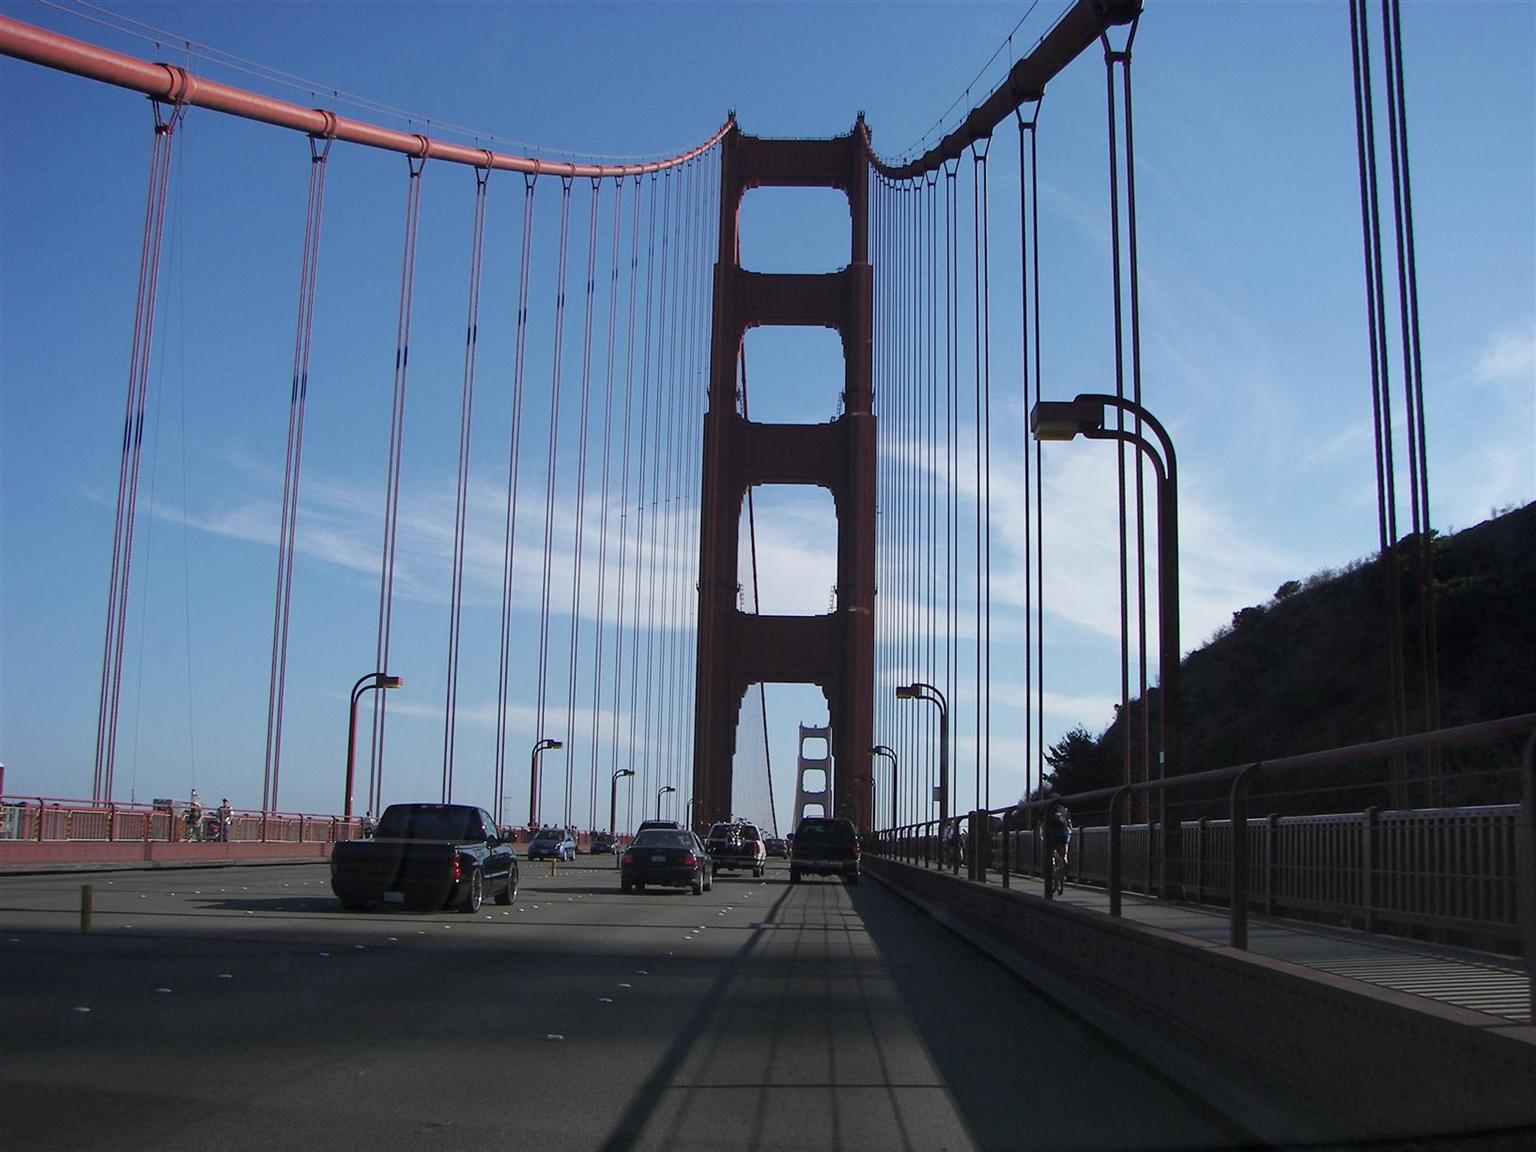 On Golden Gate Bridge